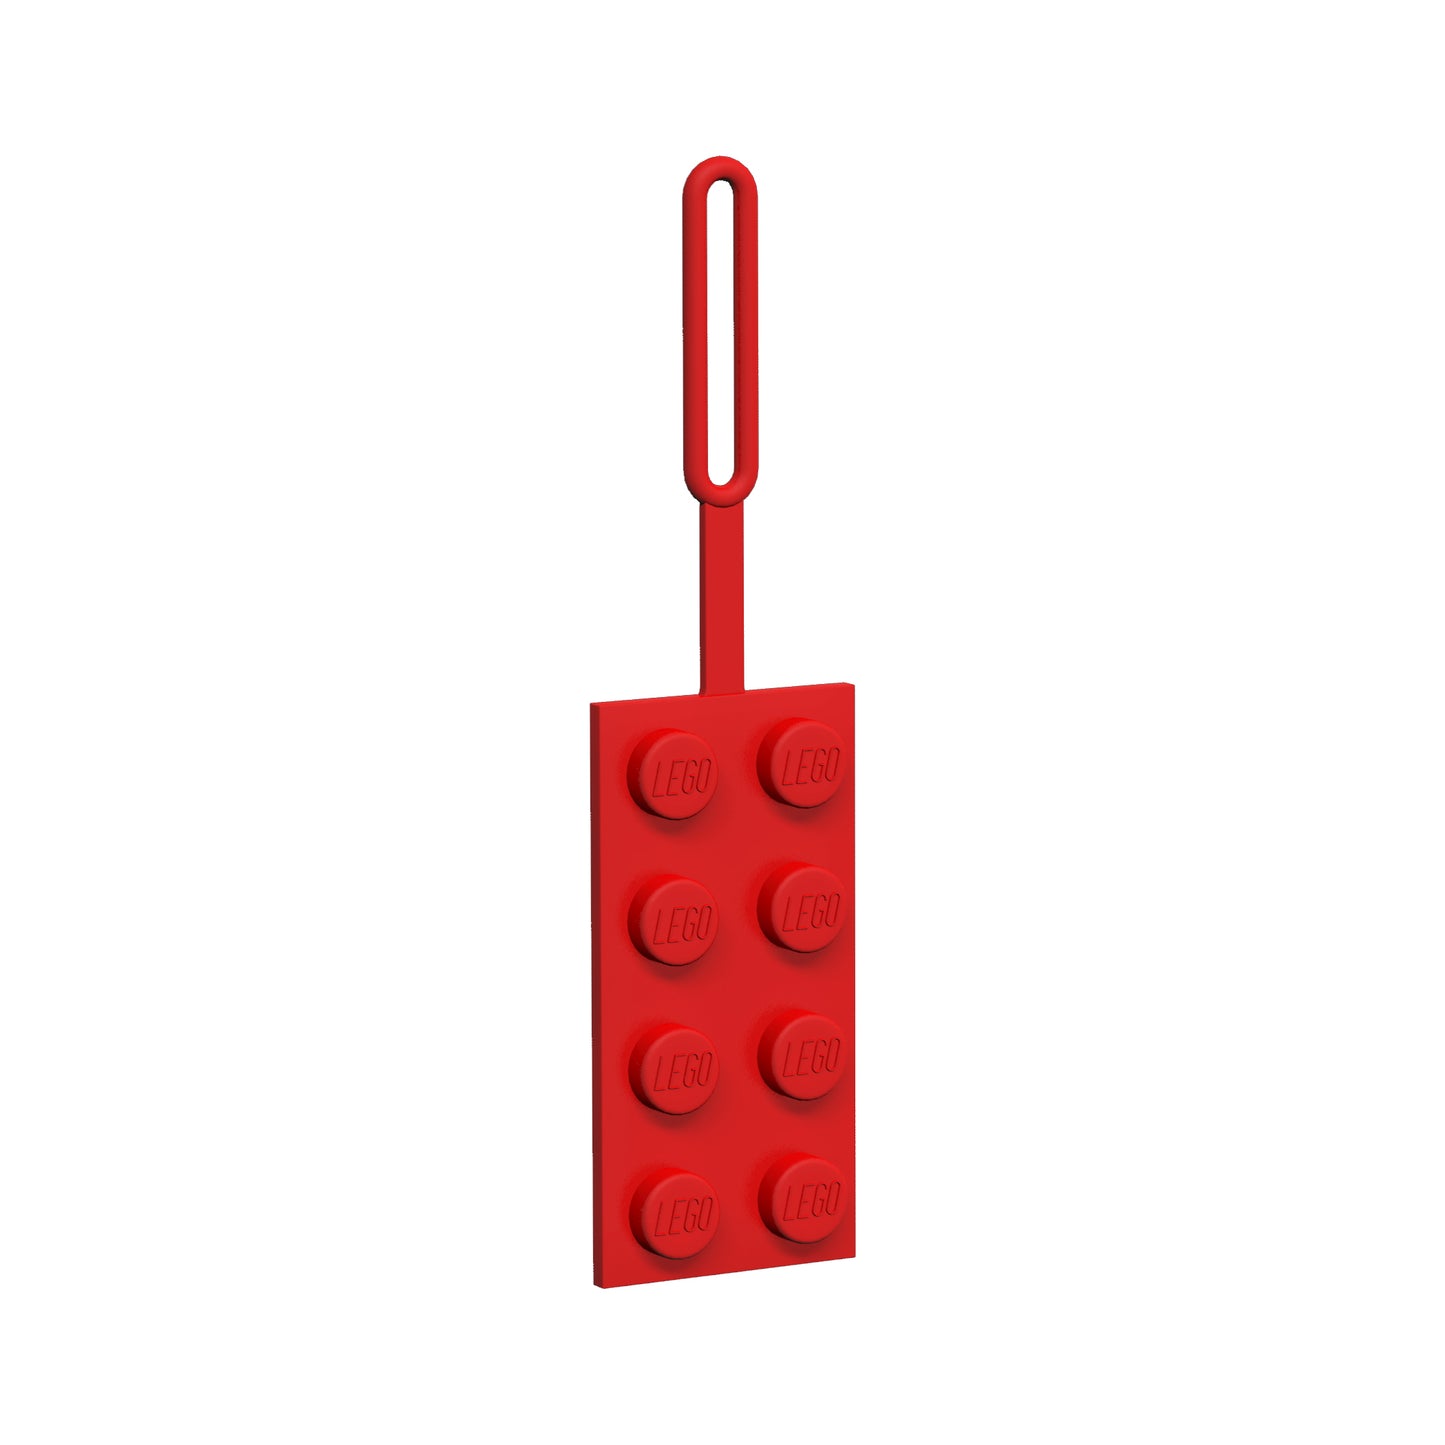 IQ LEGO® Iconic Red 2x4 Brick Bag Tag (52002)